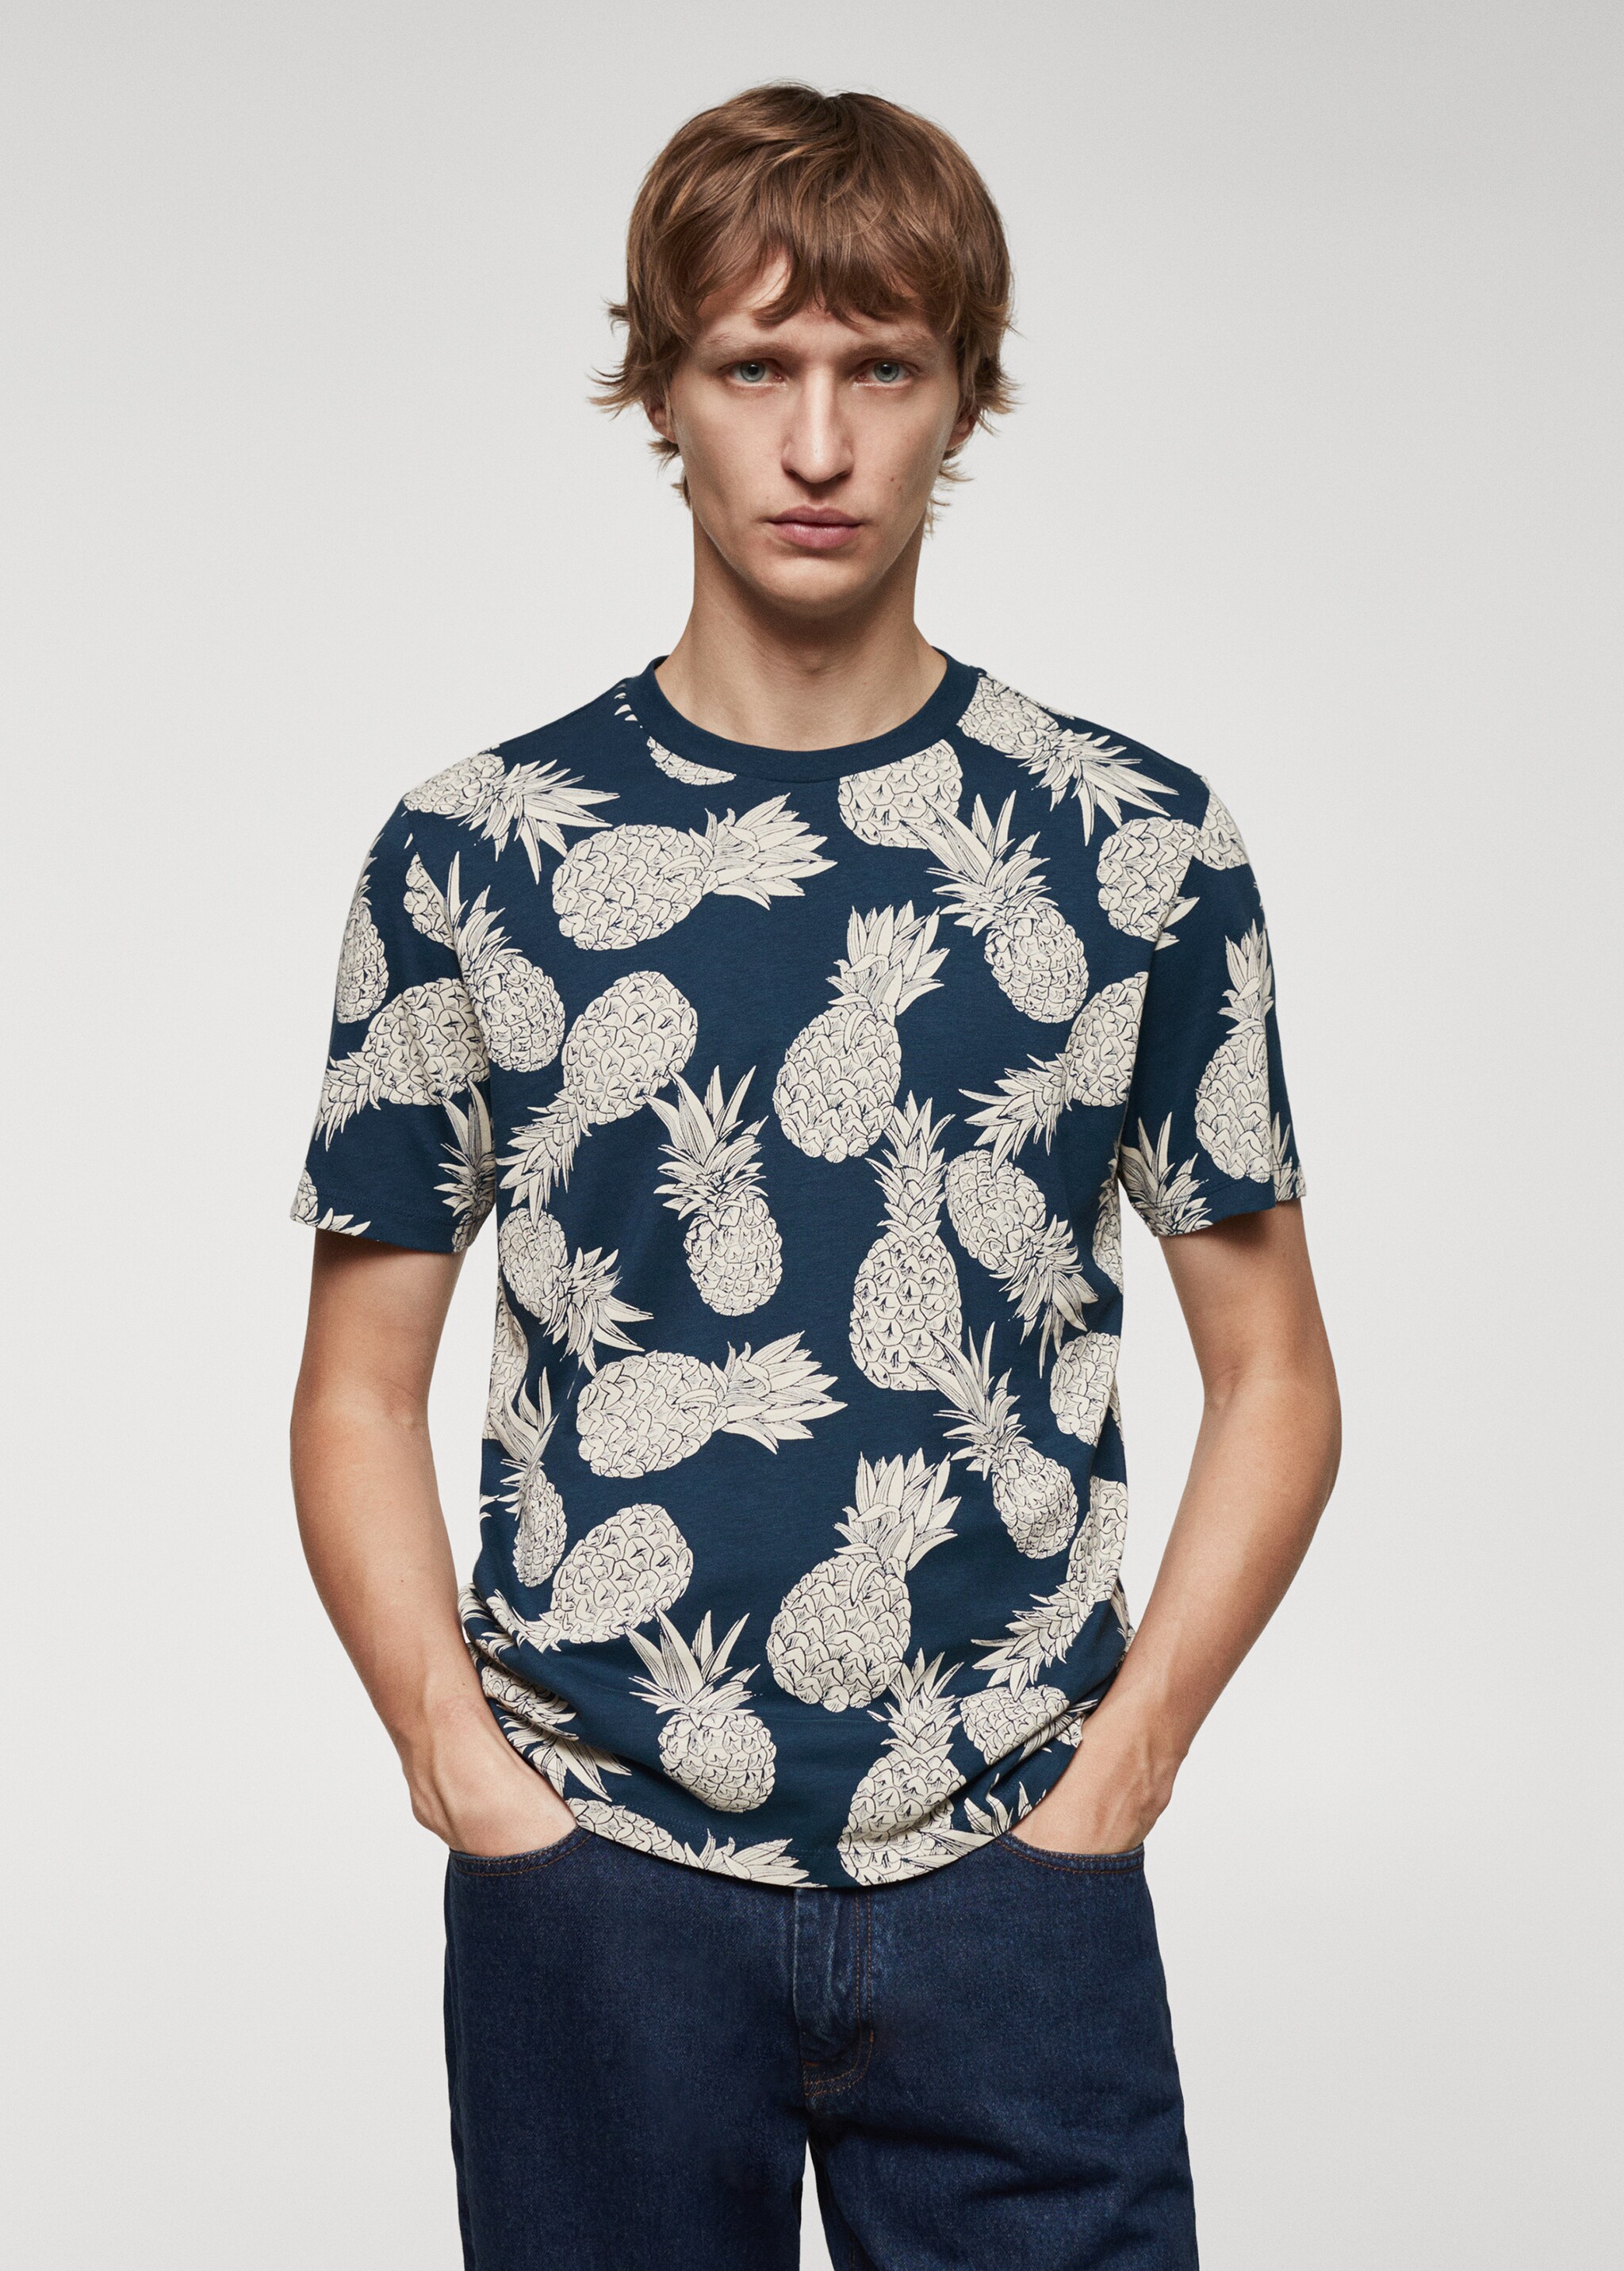 100% cotton shirt with pineapple print - Medium plane